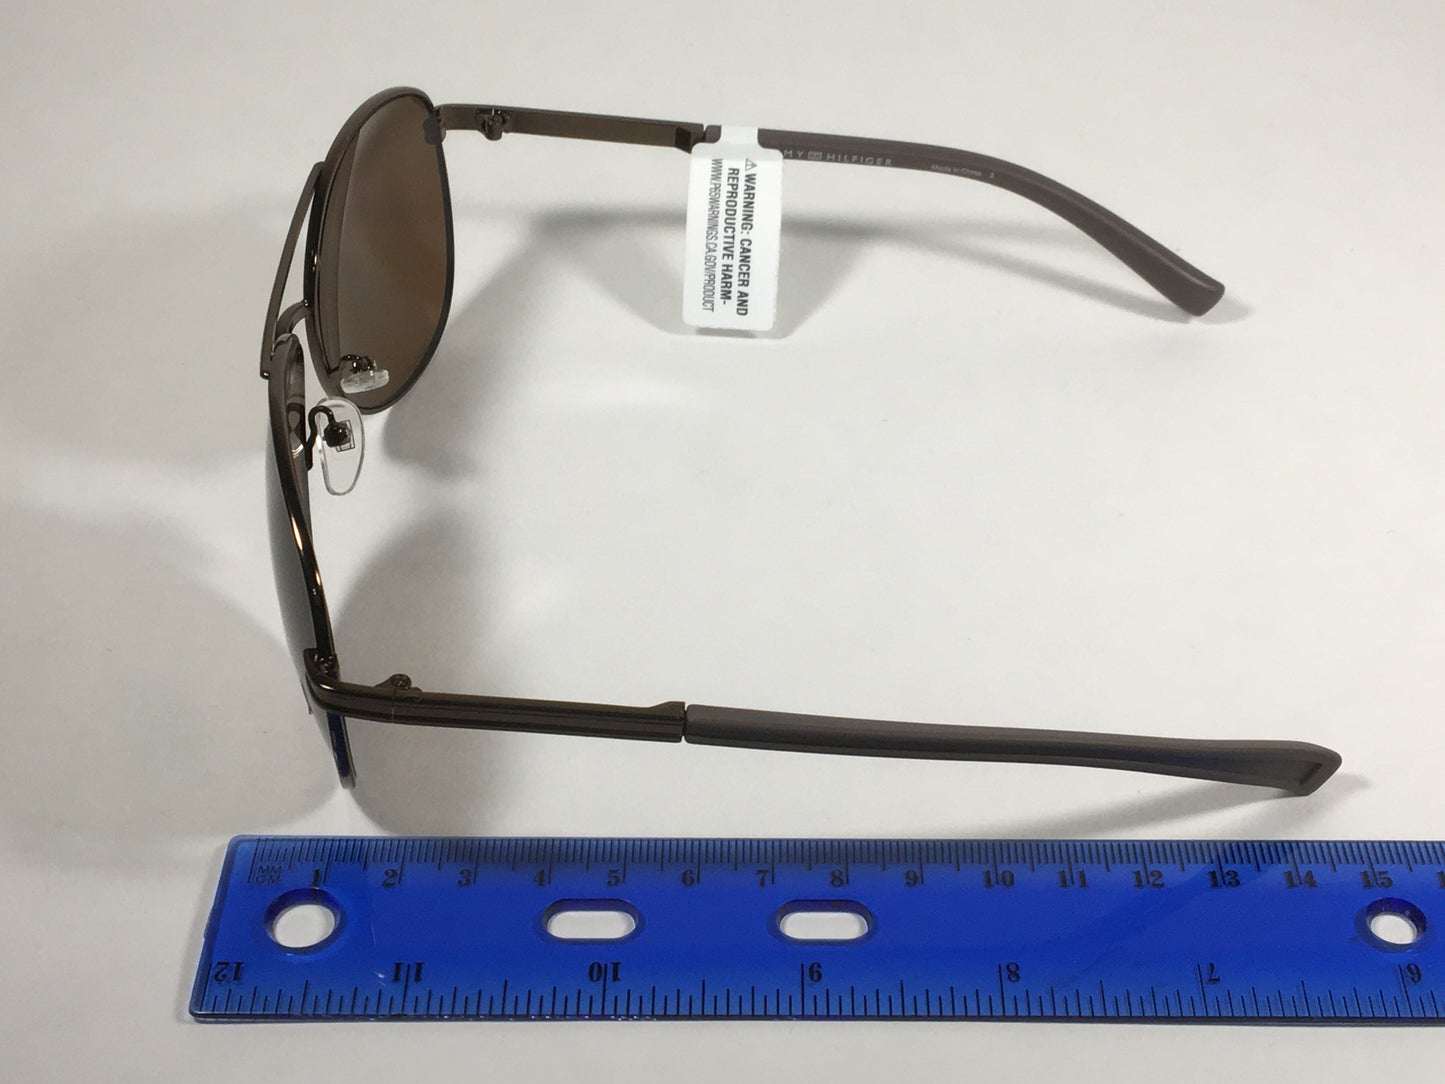 Tommy Hilfiger Bae Aviator Sunglasses Brown Bronze Metal Frame Brown Lens - Sunglasses